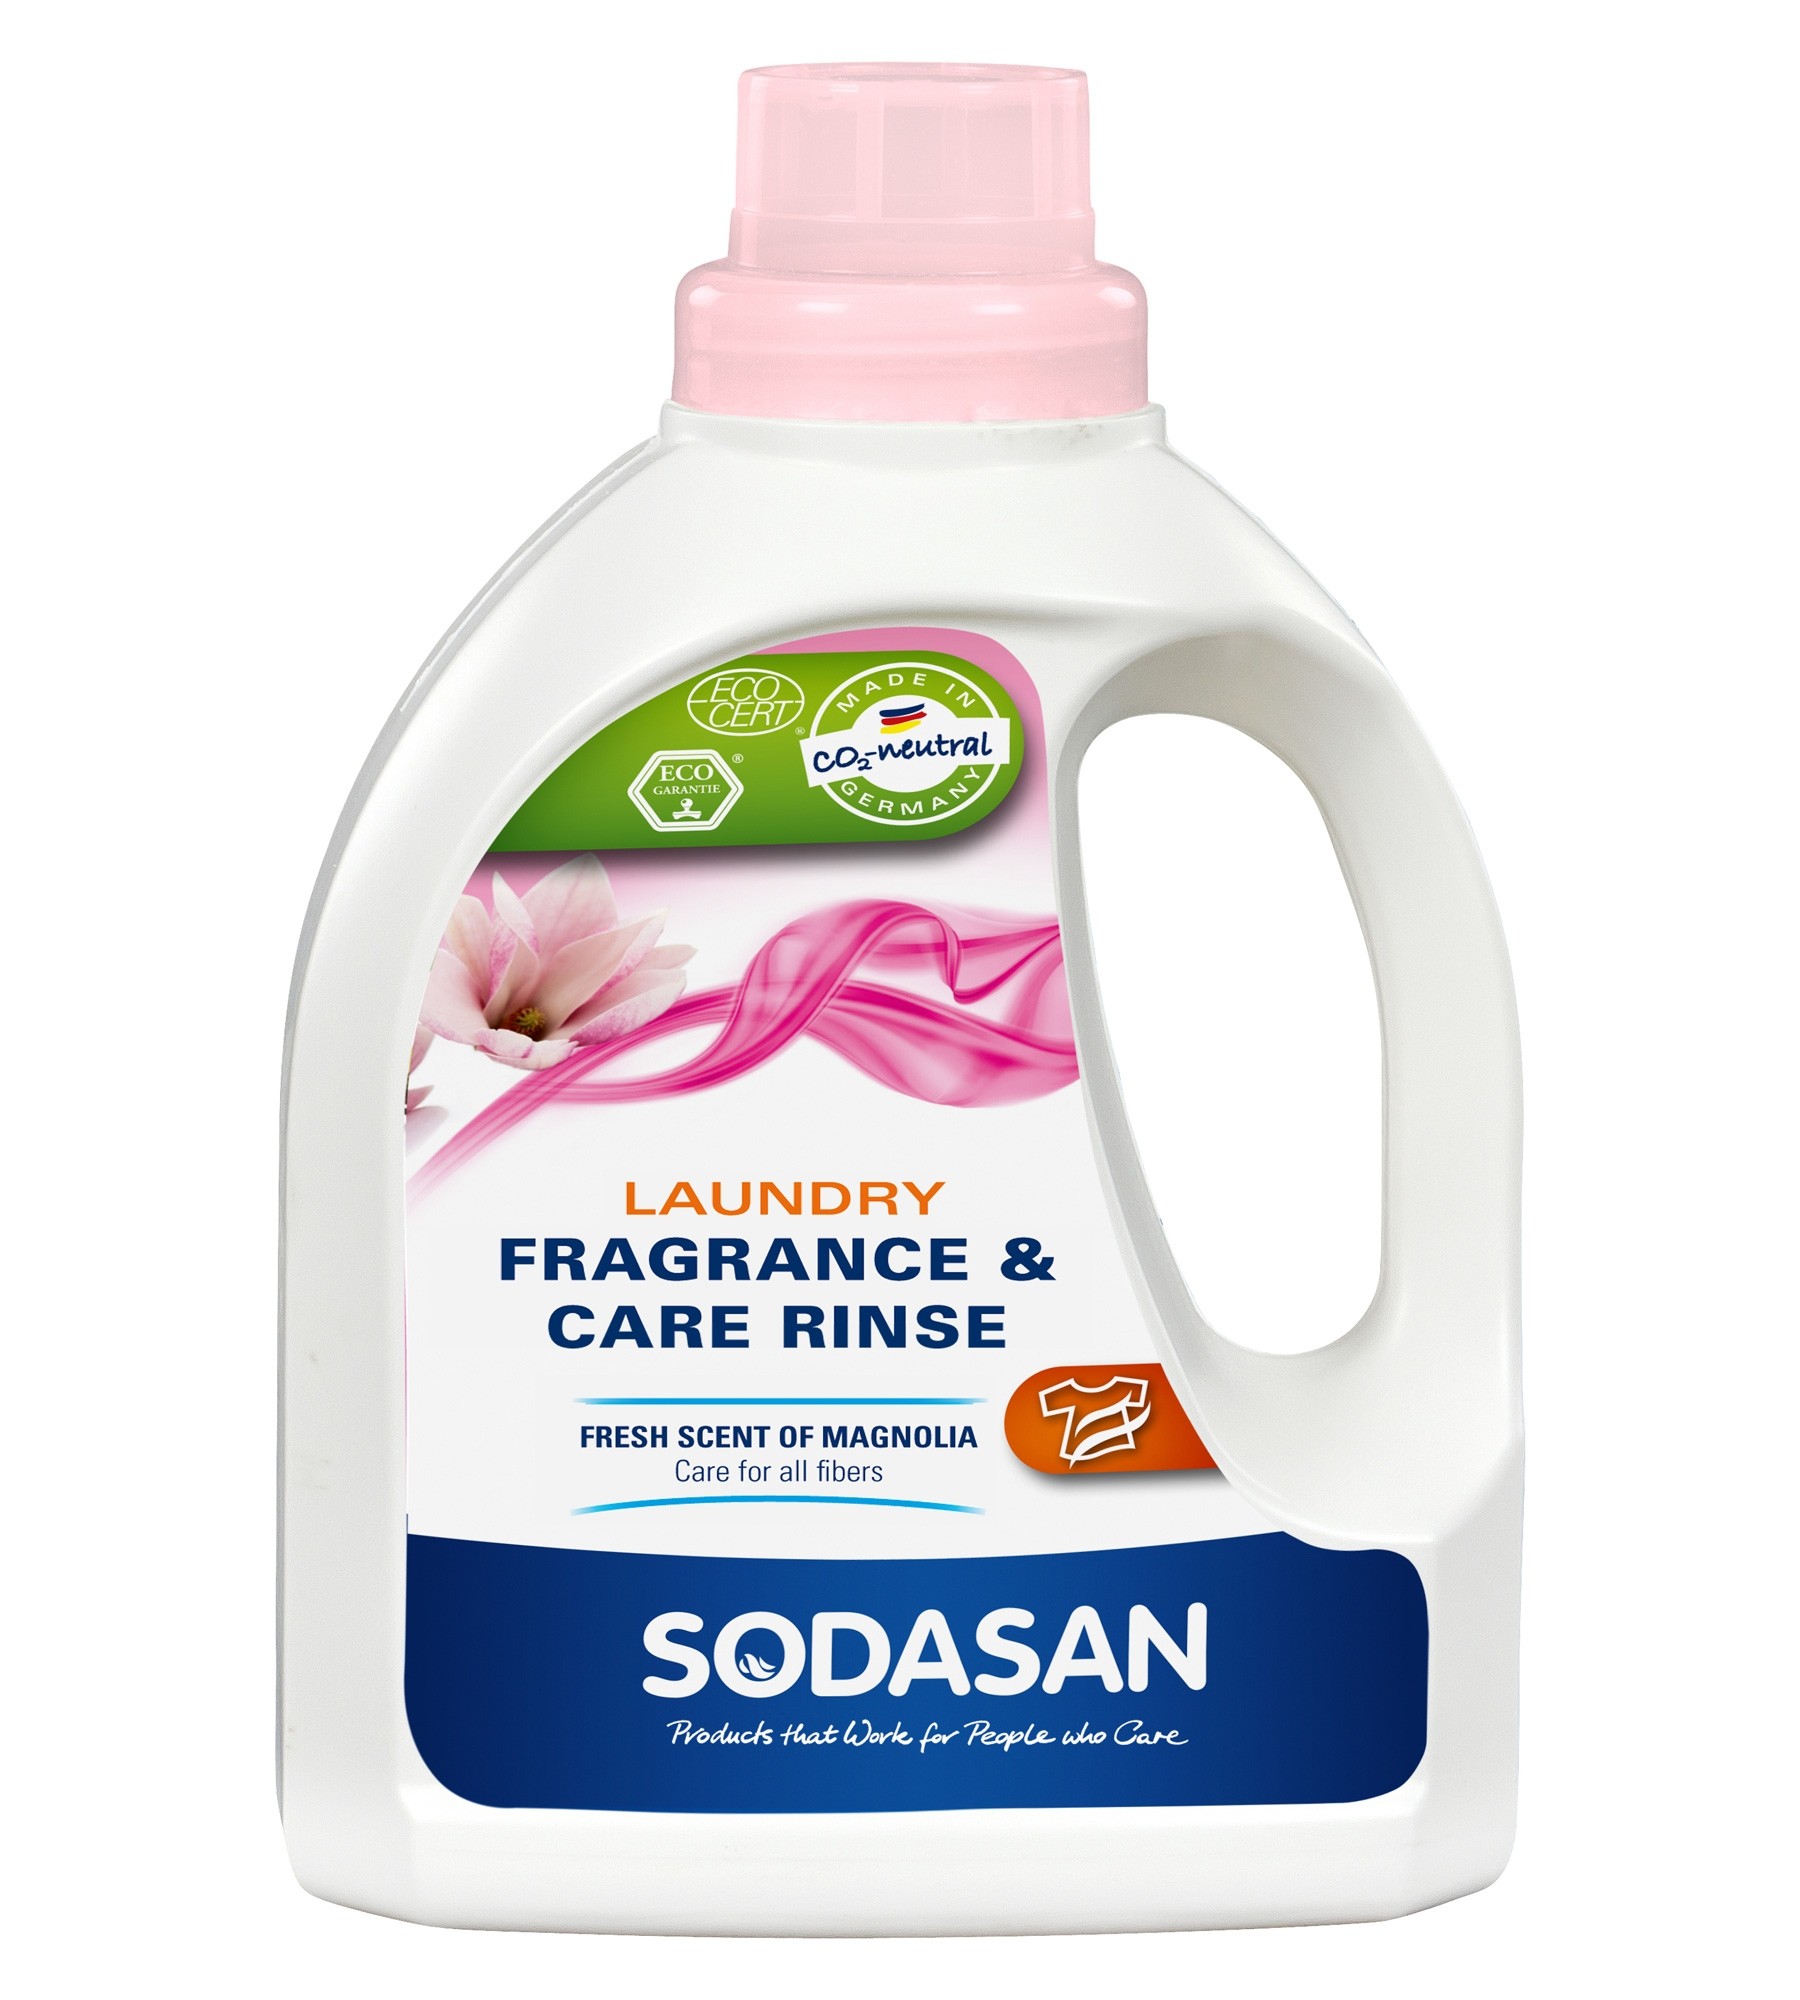 Sodasan Laundry Fragrance & Rinse